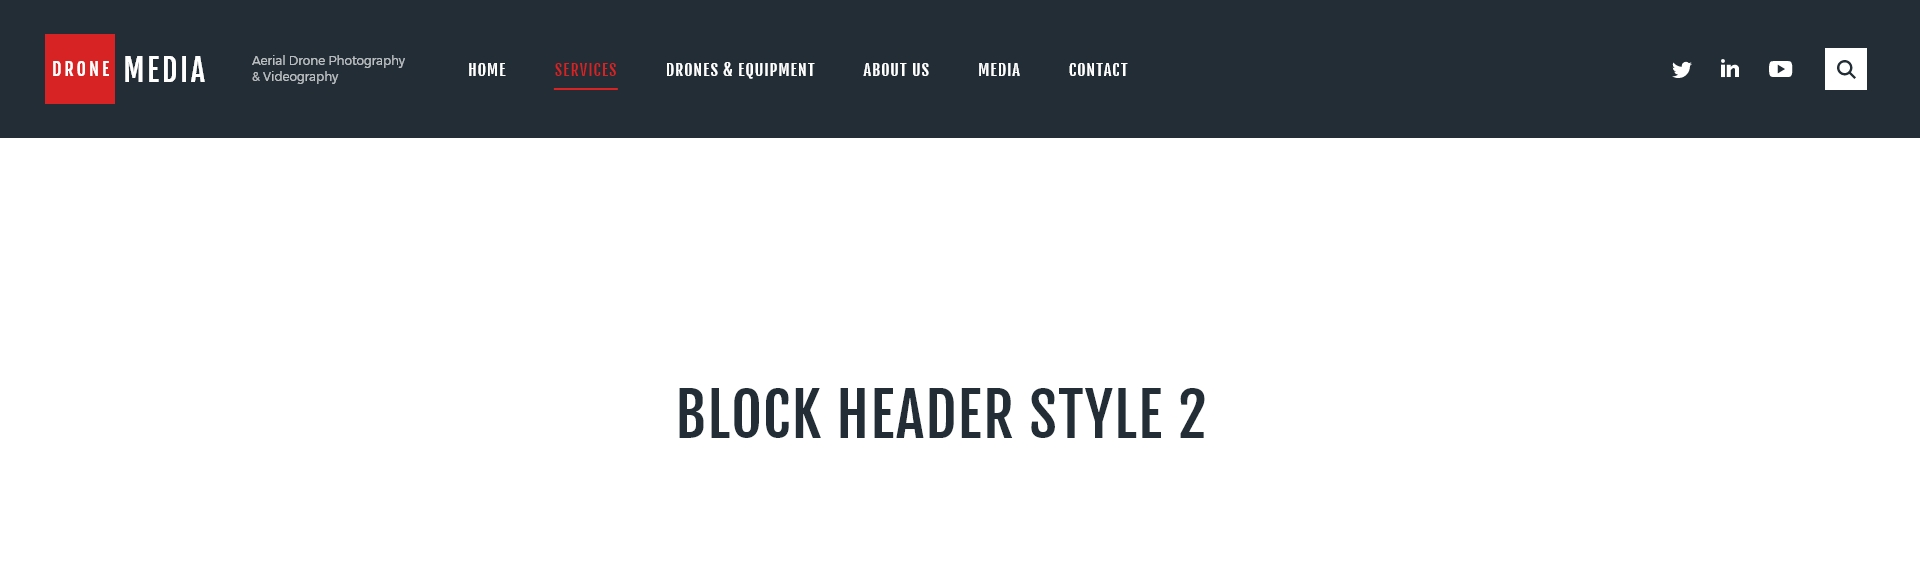 Block header style 2